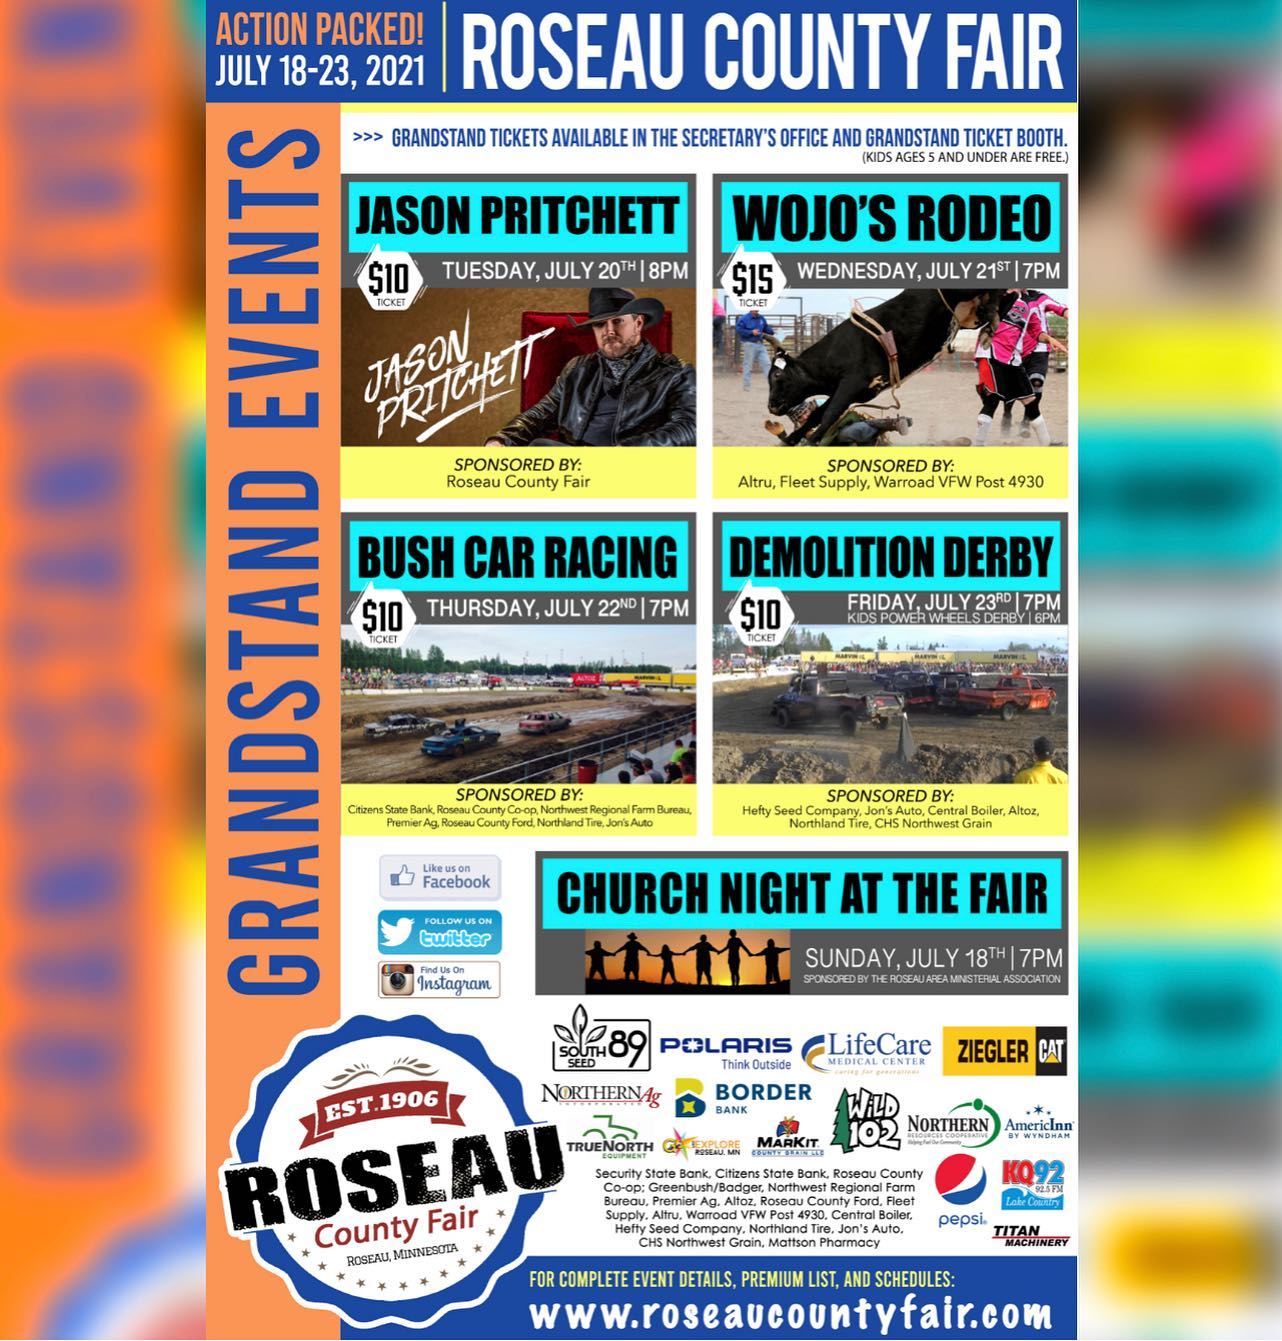 Roseau County Fair Go Explore Roseau, Minnesota